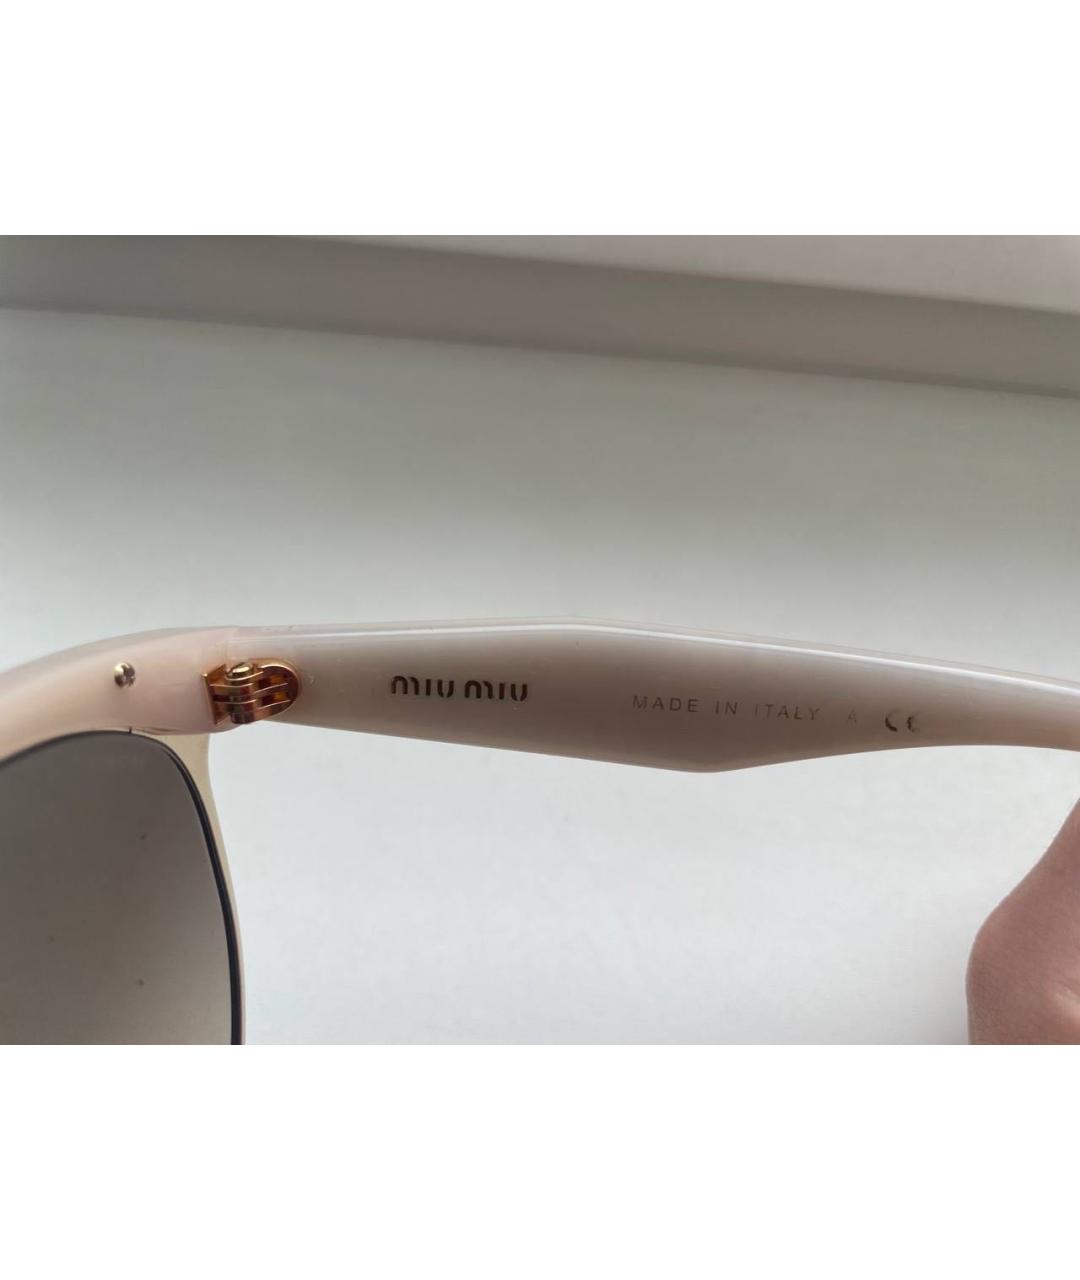 MIU MIU Розовые пластиковые солнцезащитные очки, фото 4